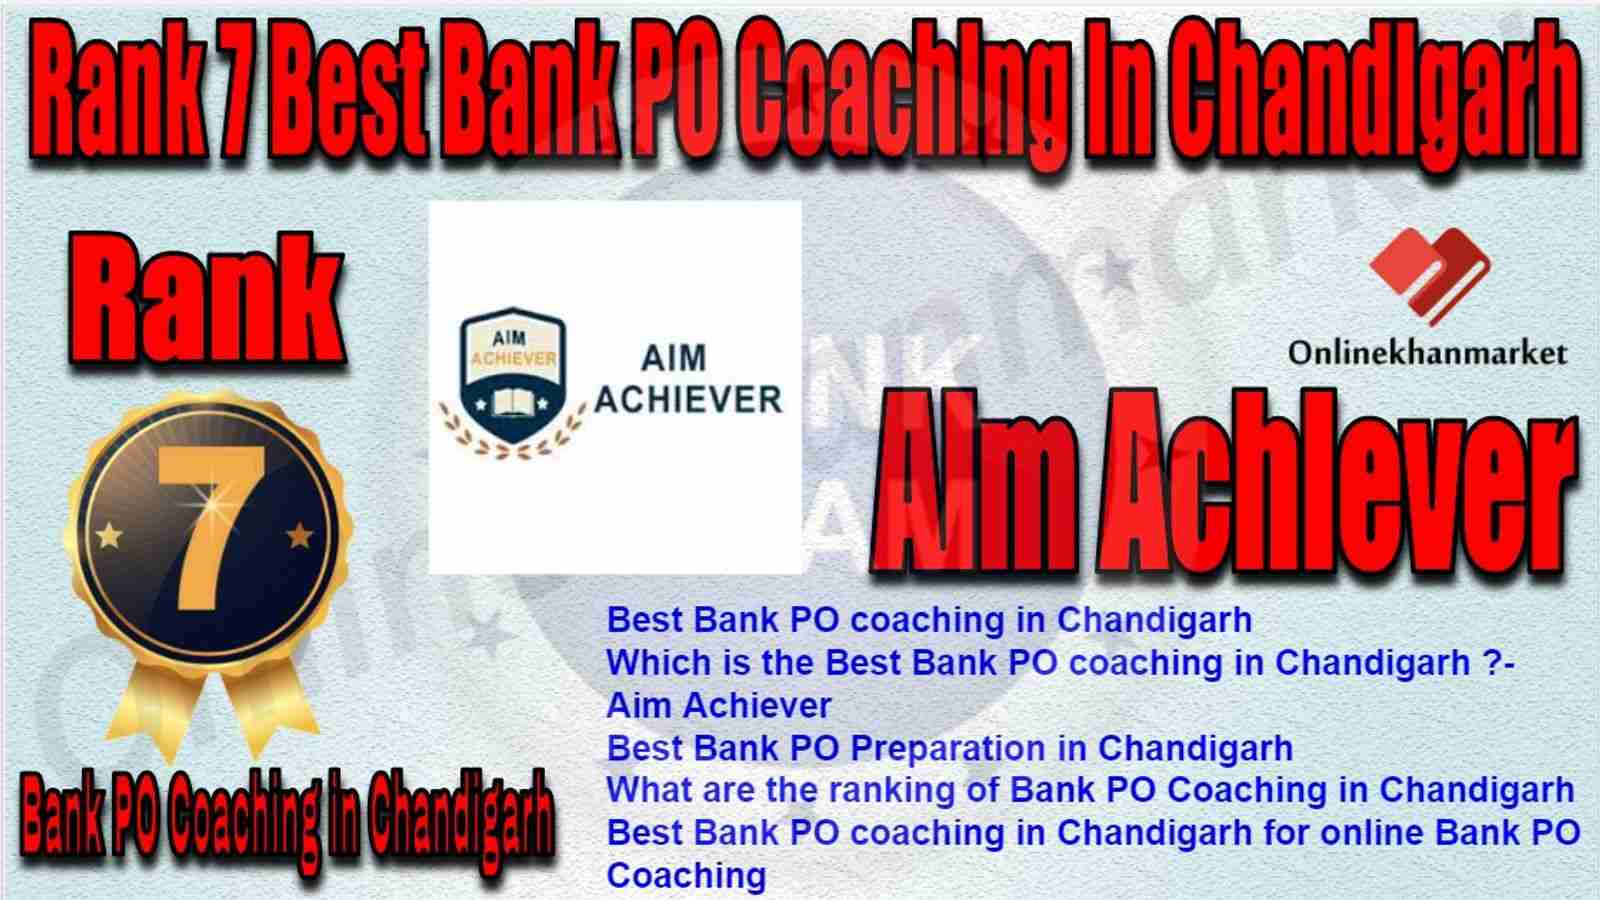 Rank 7 Best Bank PO Coaching in Chandigarh